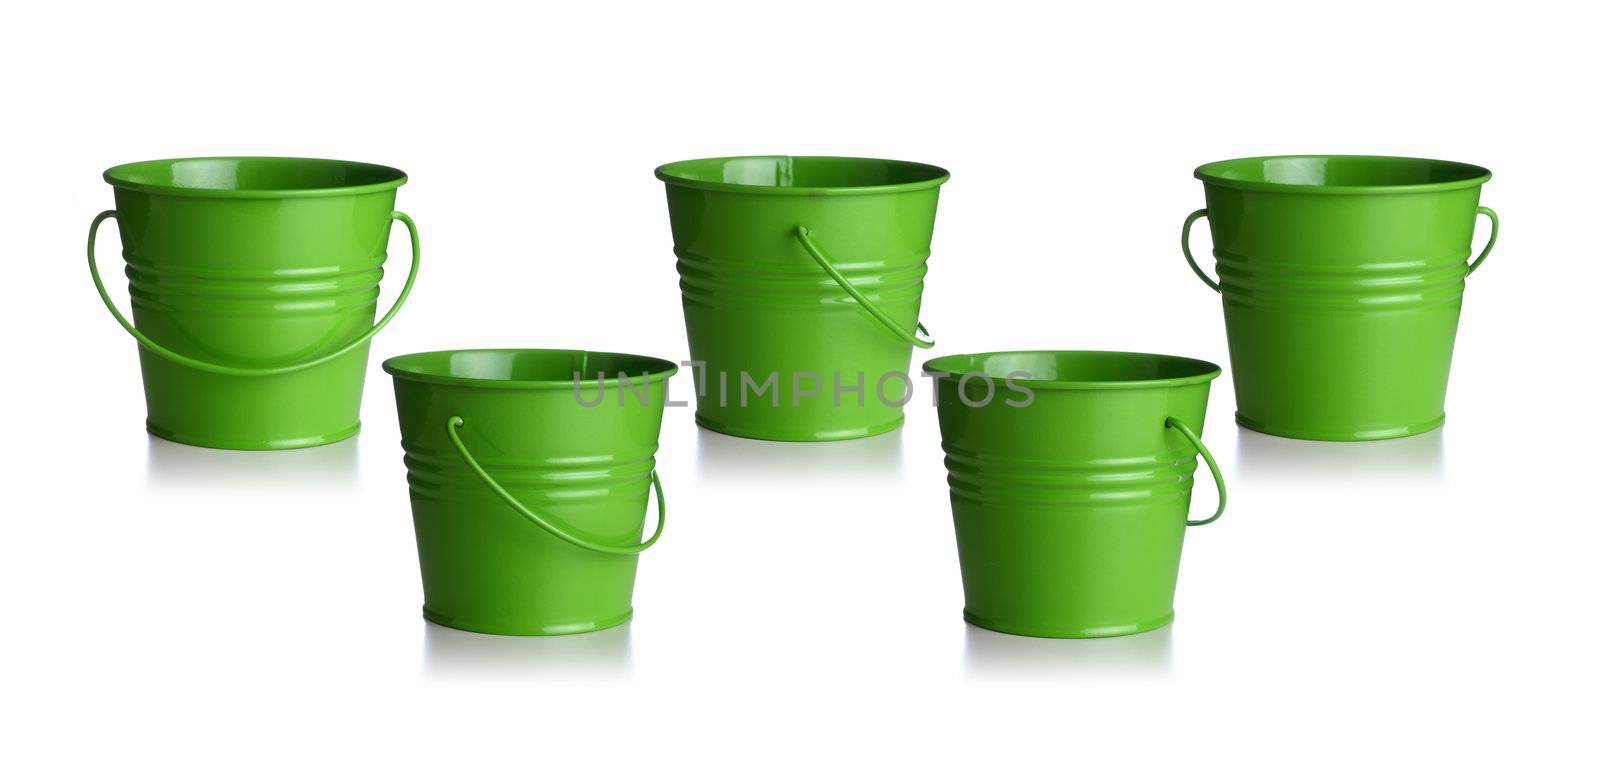 green buckets by kokimk